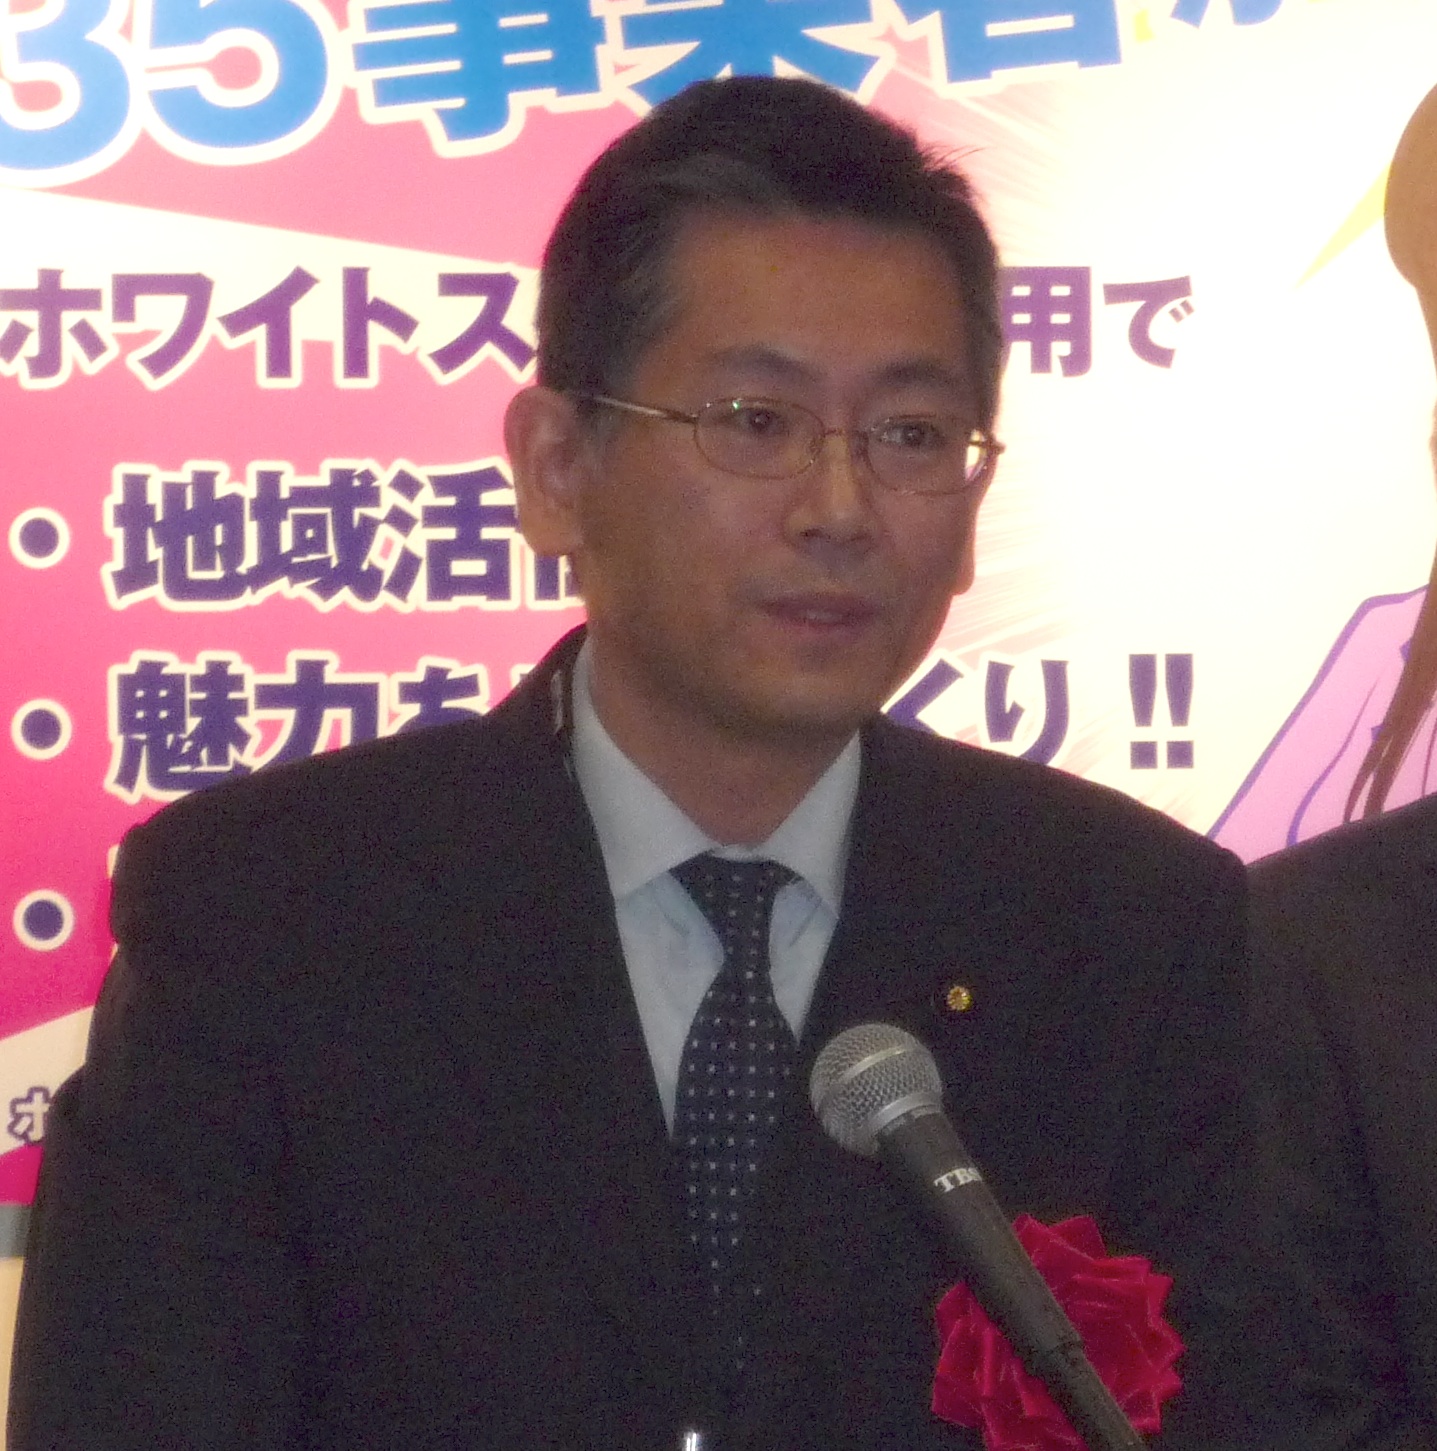 Mr. Takashi Morita, Parliamentary Secretary for Minister of Internal Affairs and Communications